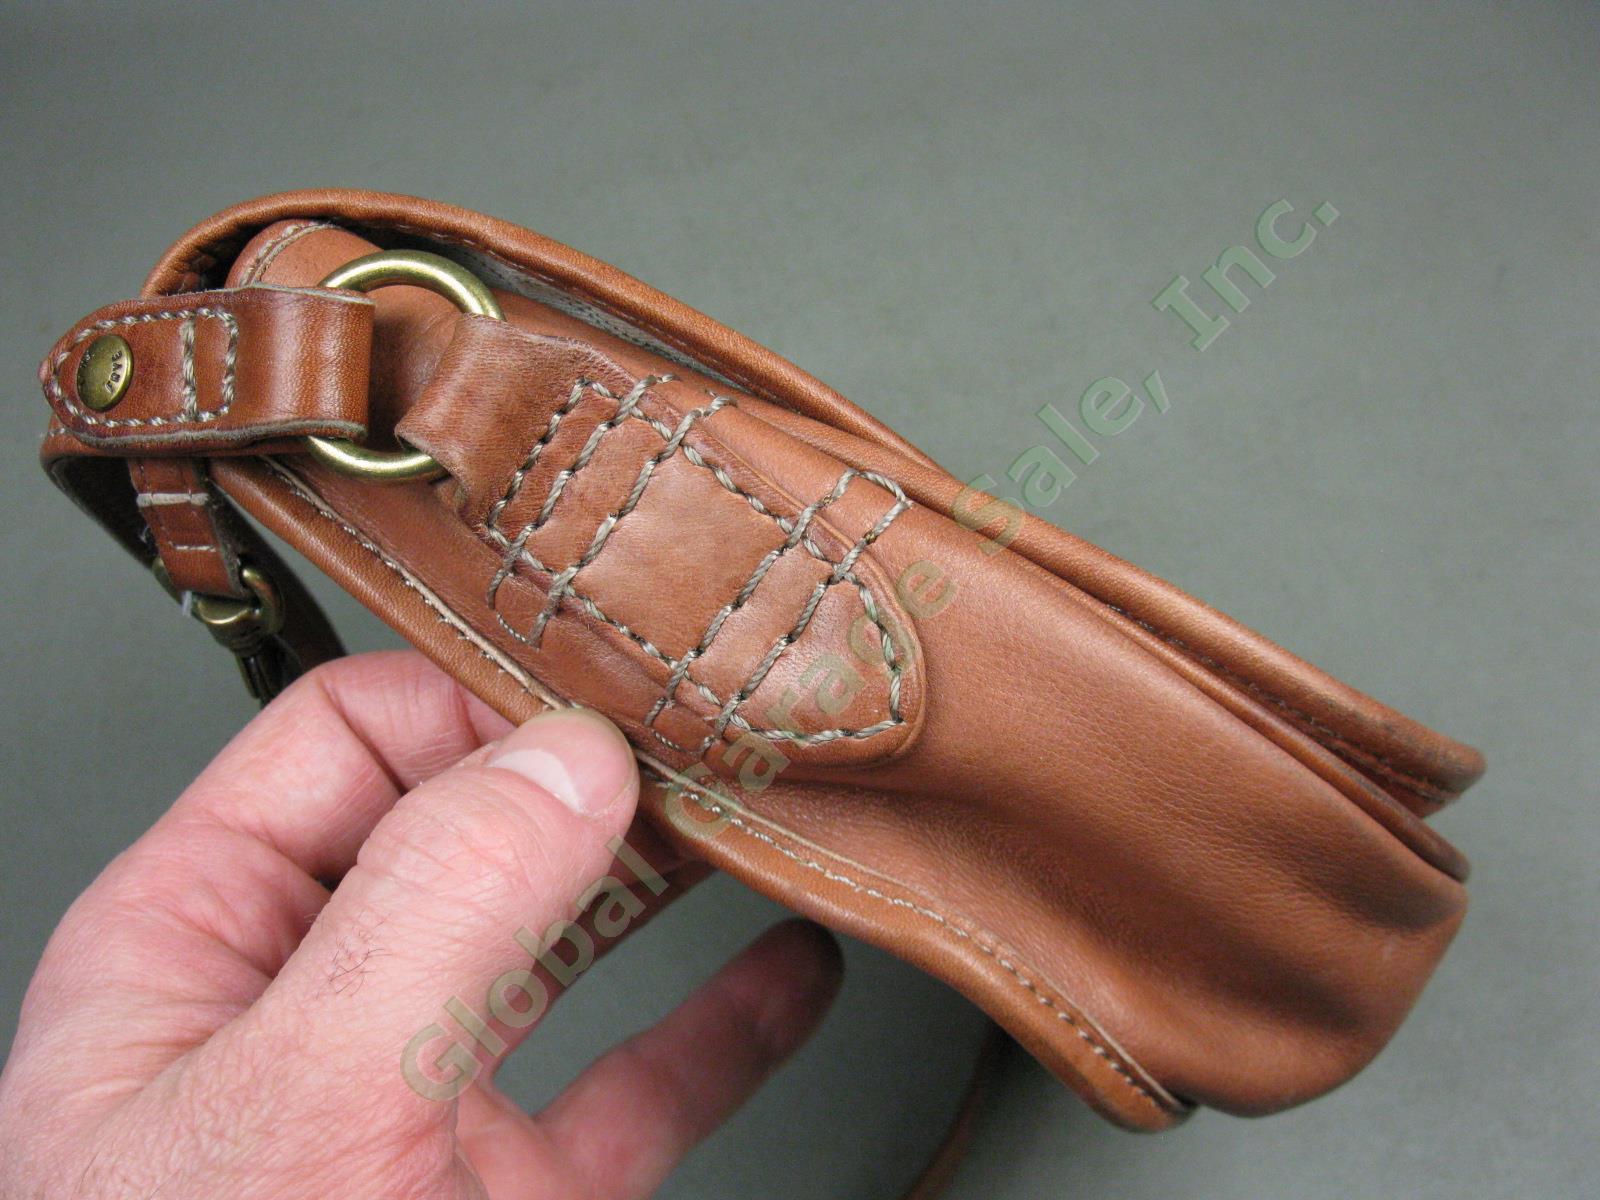 Frye Campus Saddle Cross Body Leather Handbag Clutch DB891 $298 Retail NORESERVE 4